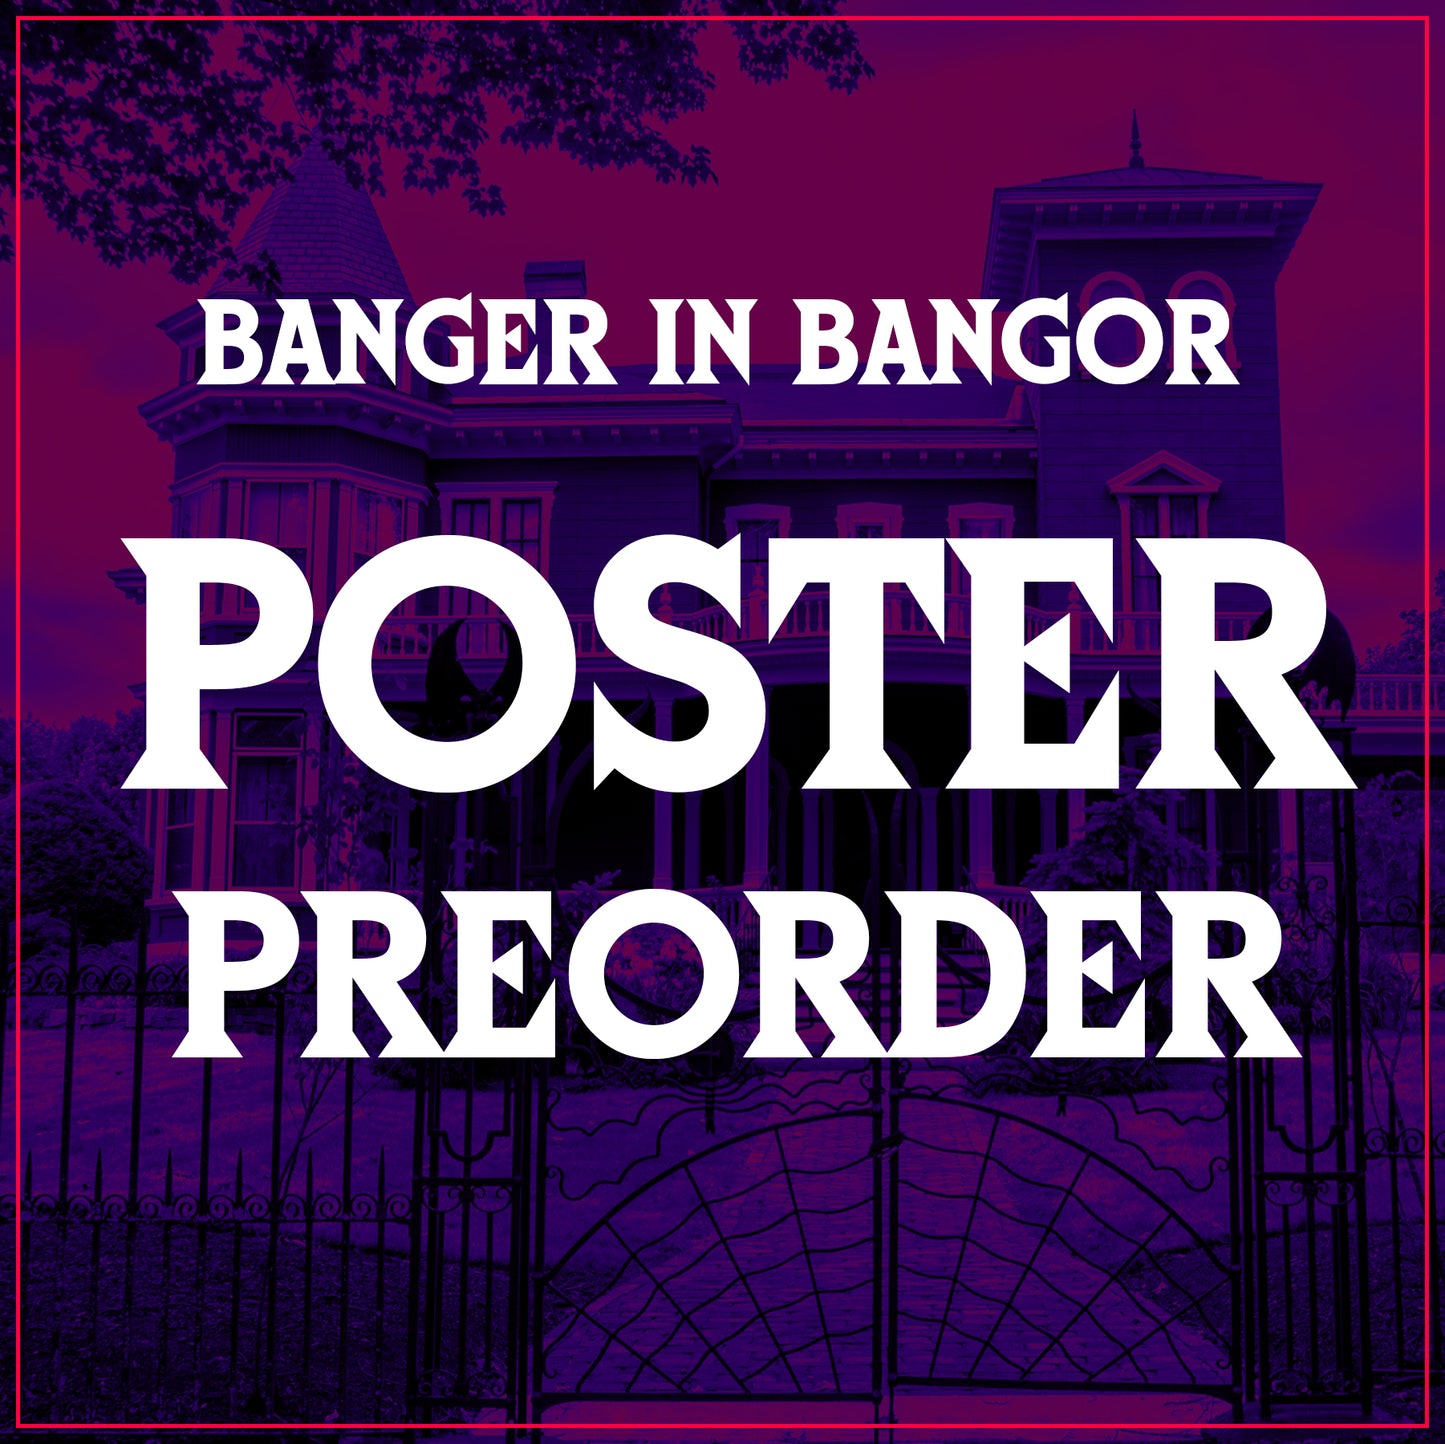 Daniel Danger "Banger in Bangor" screenprint